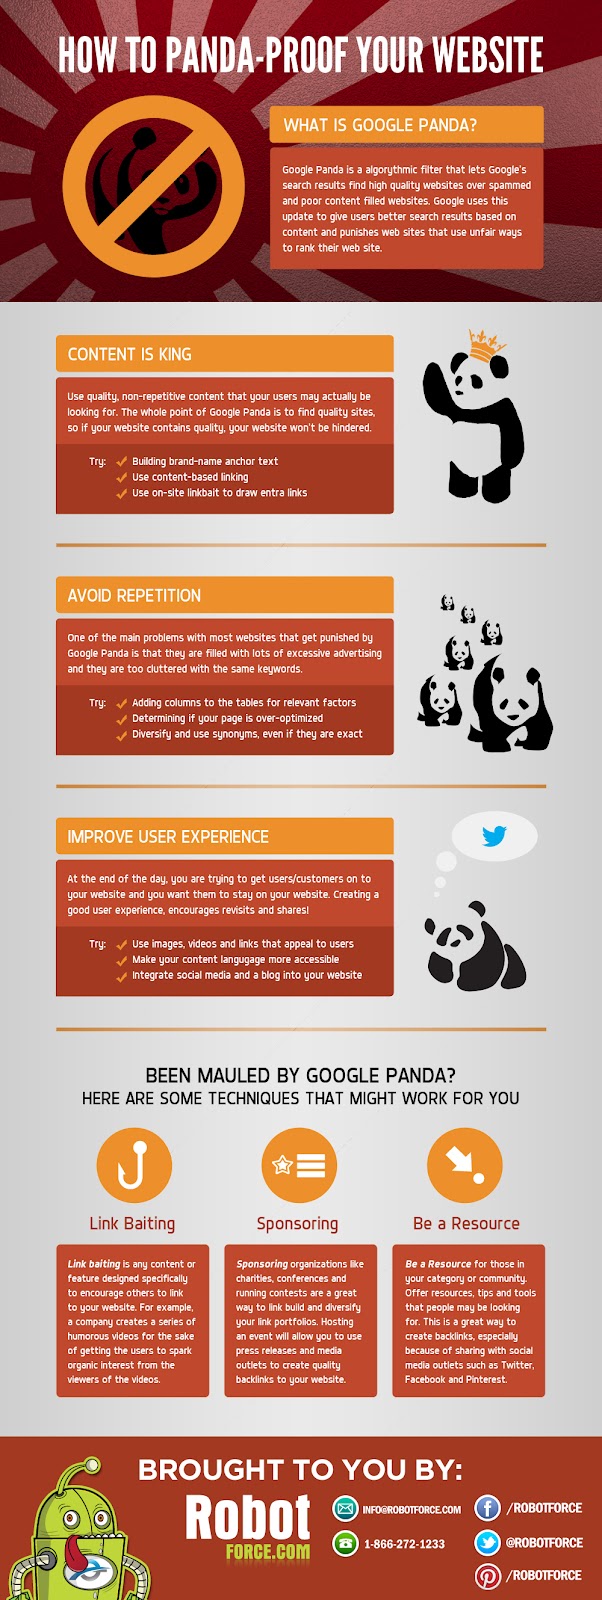 Infographie Google Panda